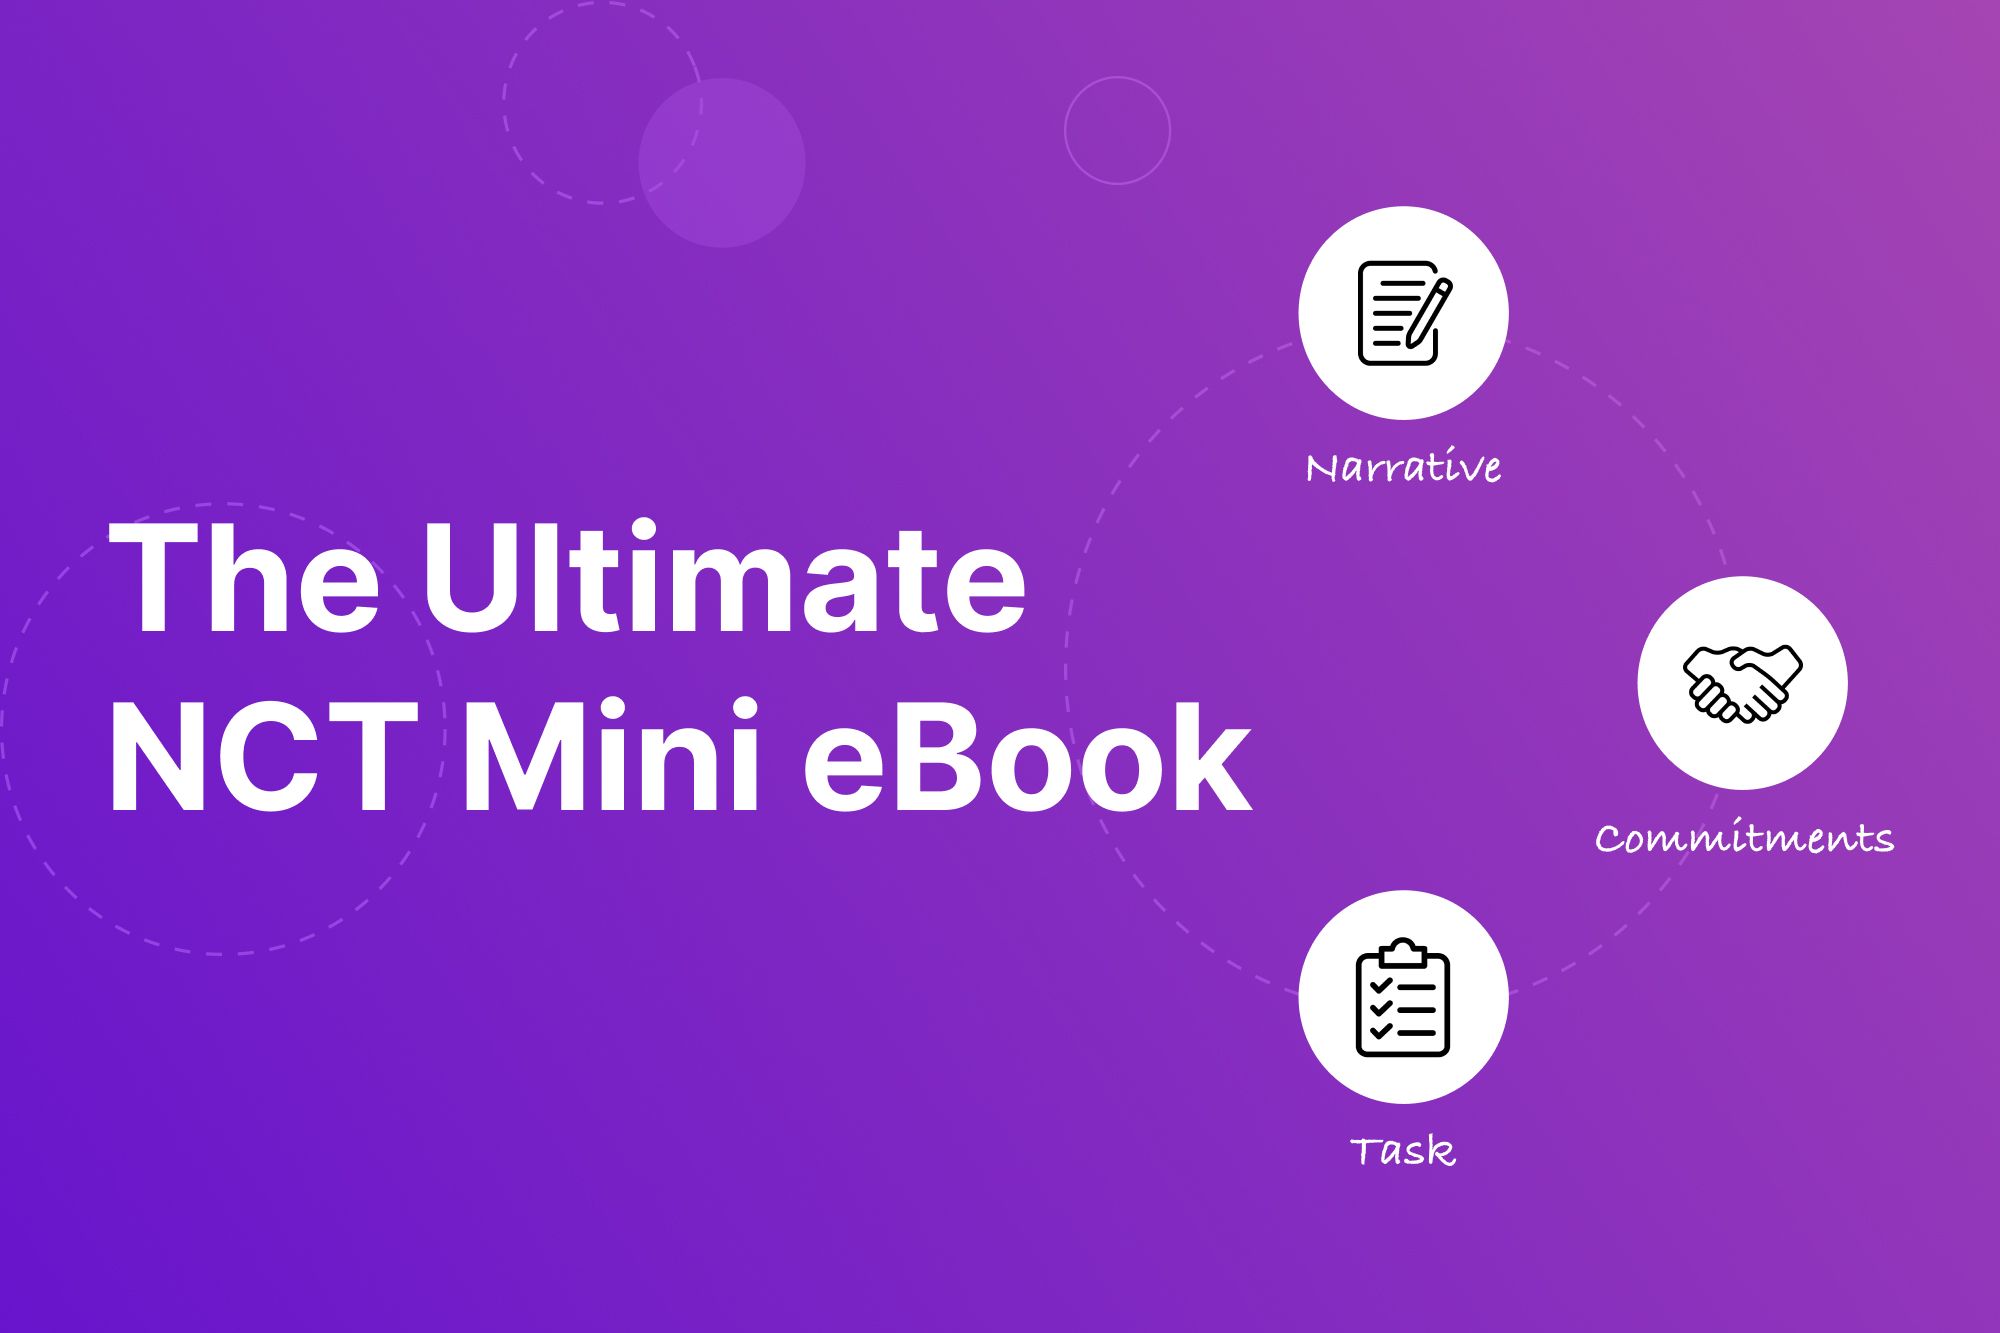 The Ultimate NCT Mini eBook